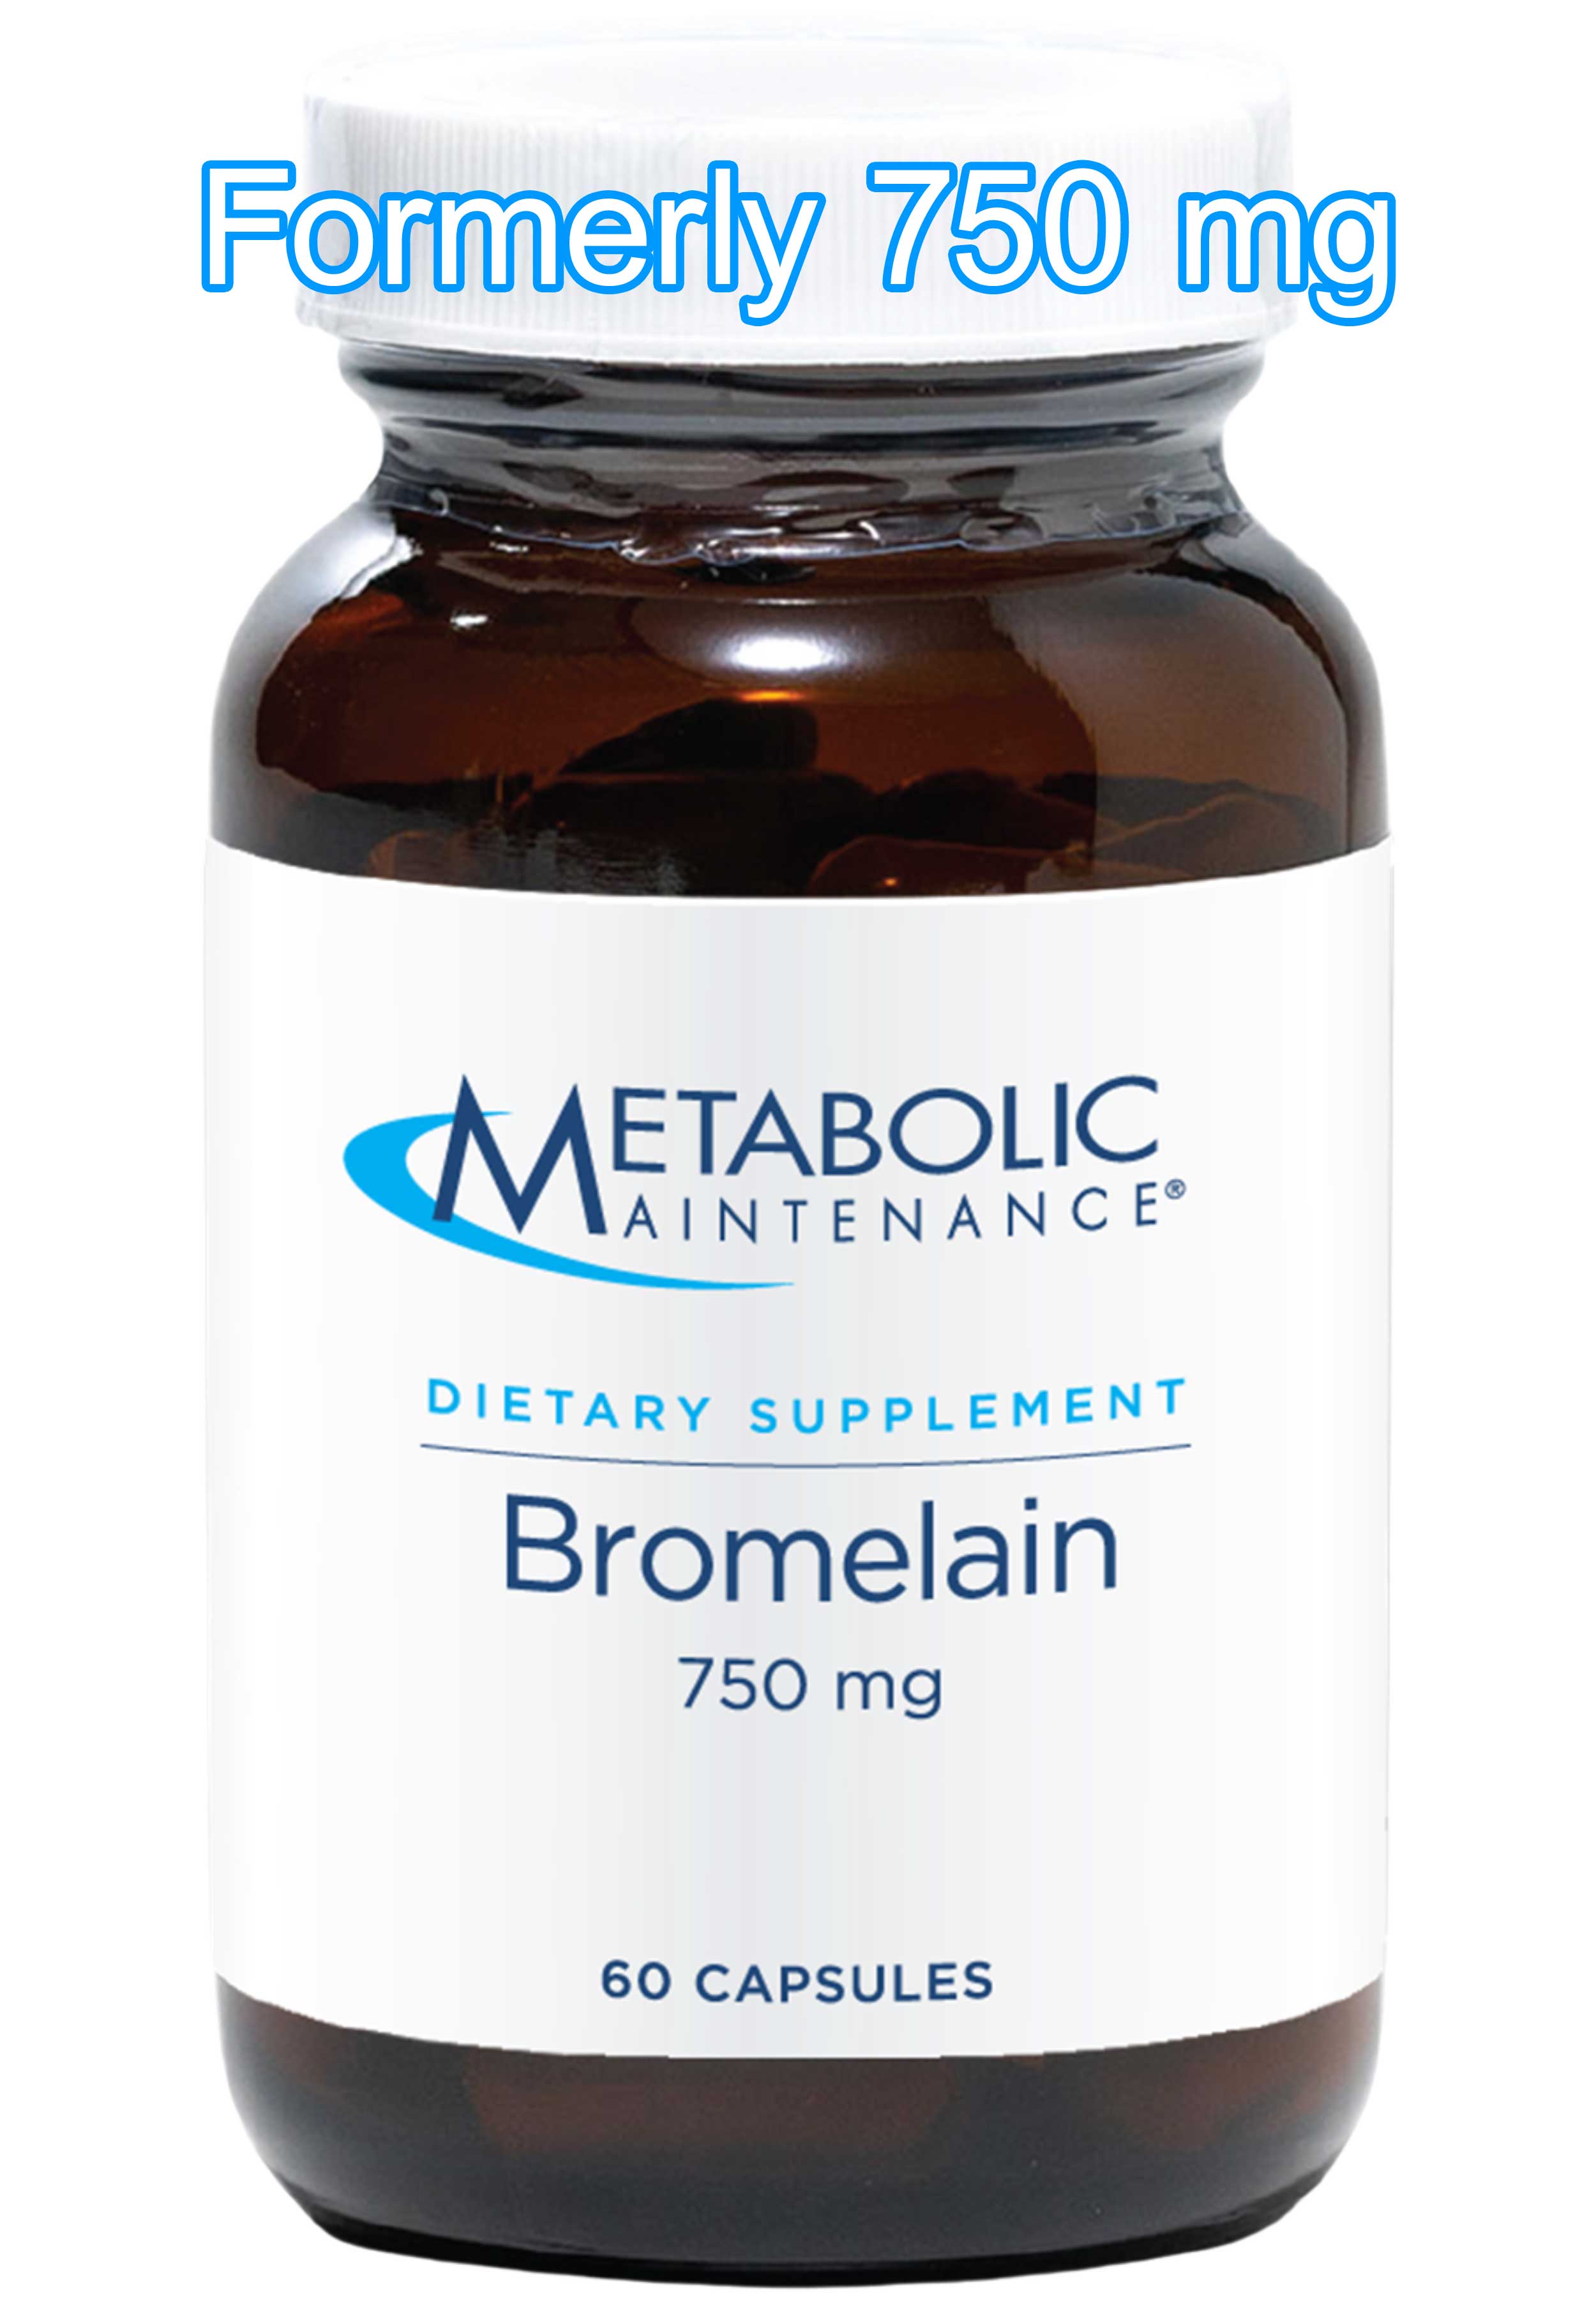 Metabolic Maintenance Bromelain 500 mg